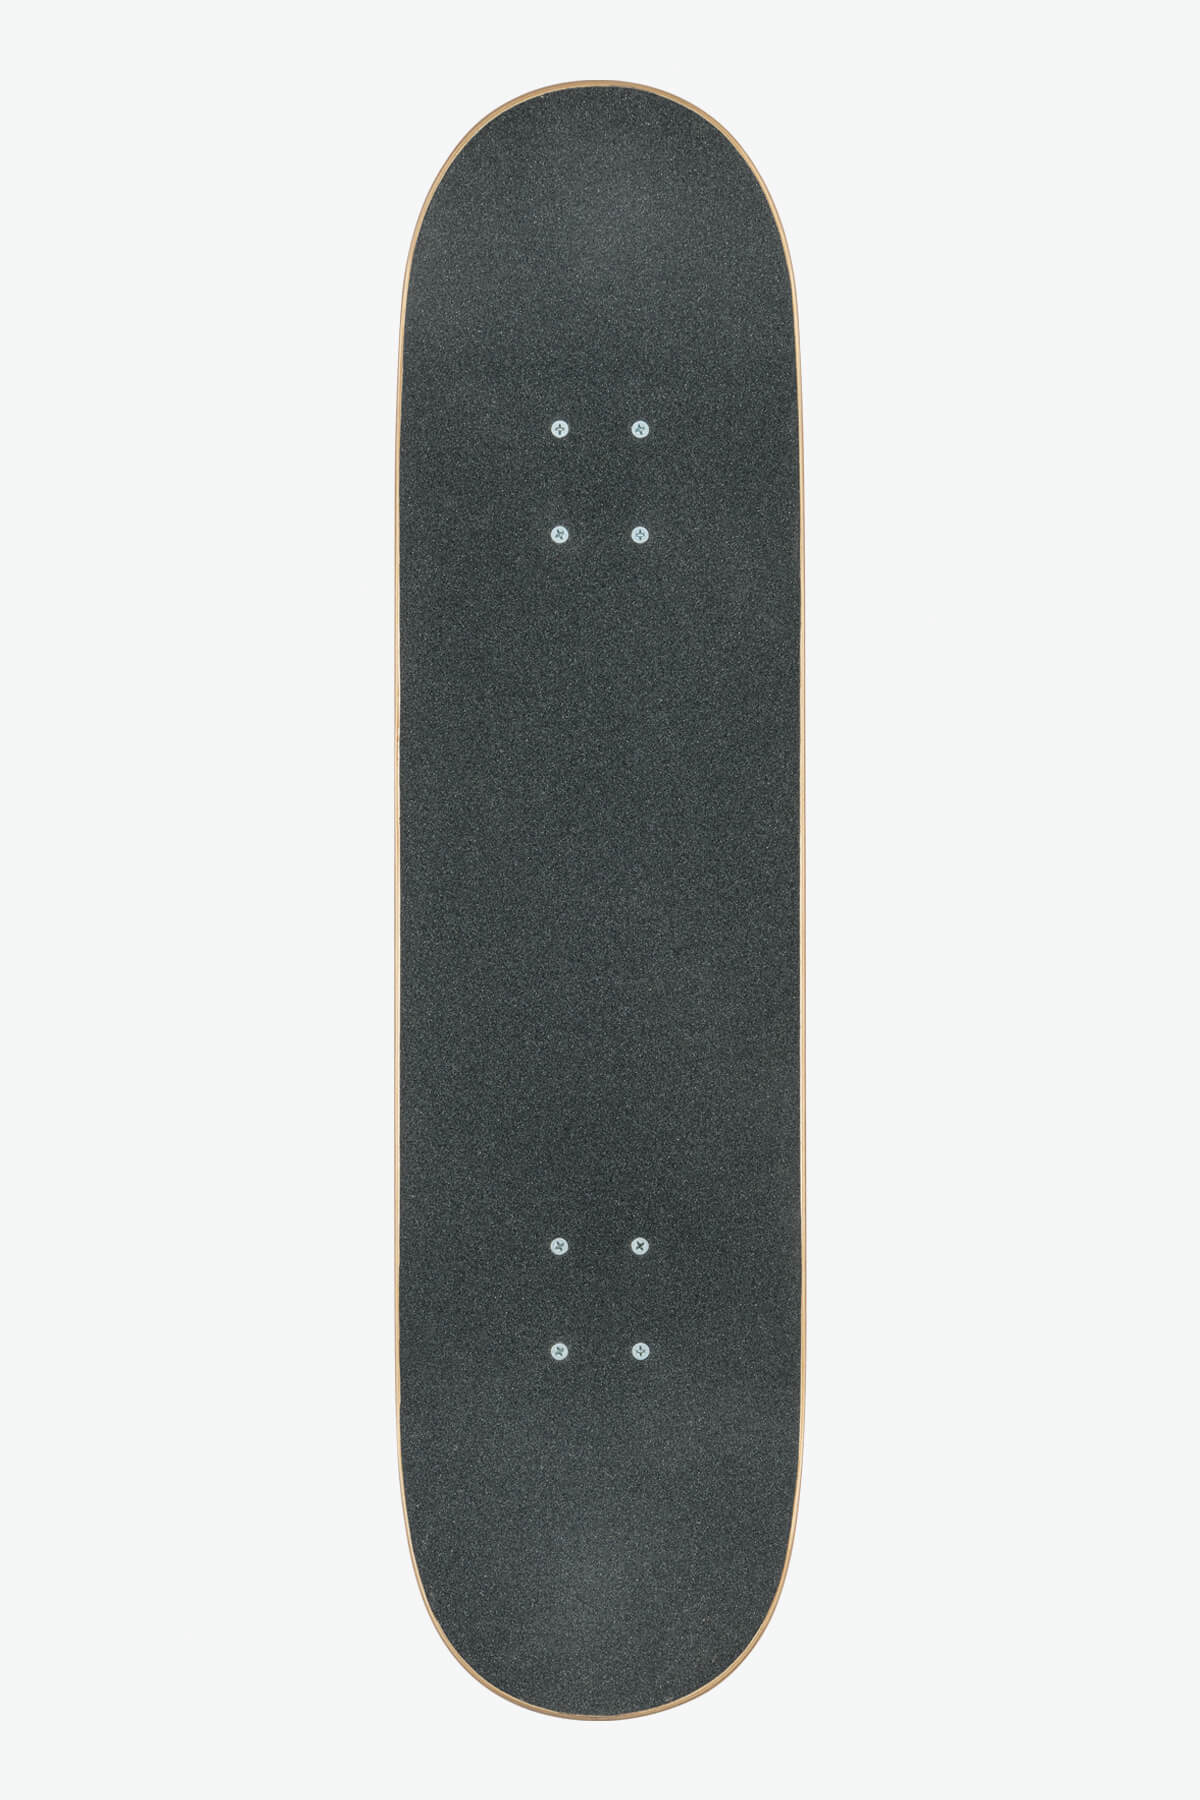 Globe - G0 Checked Out - Schwarz/Off-White - 8.0" Komplett Skateboard